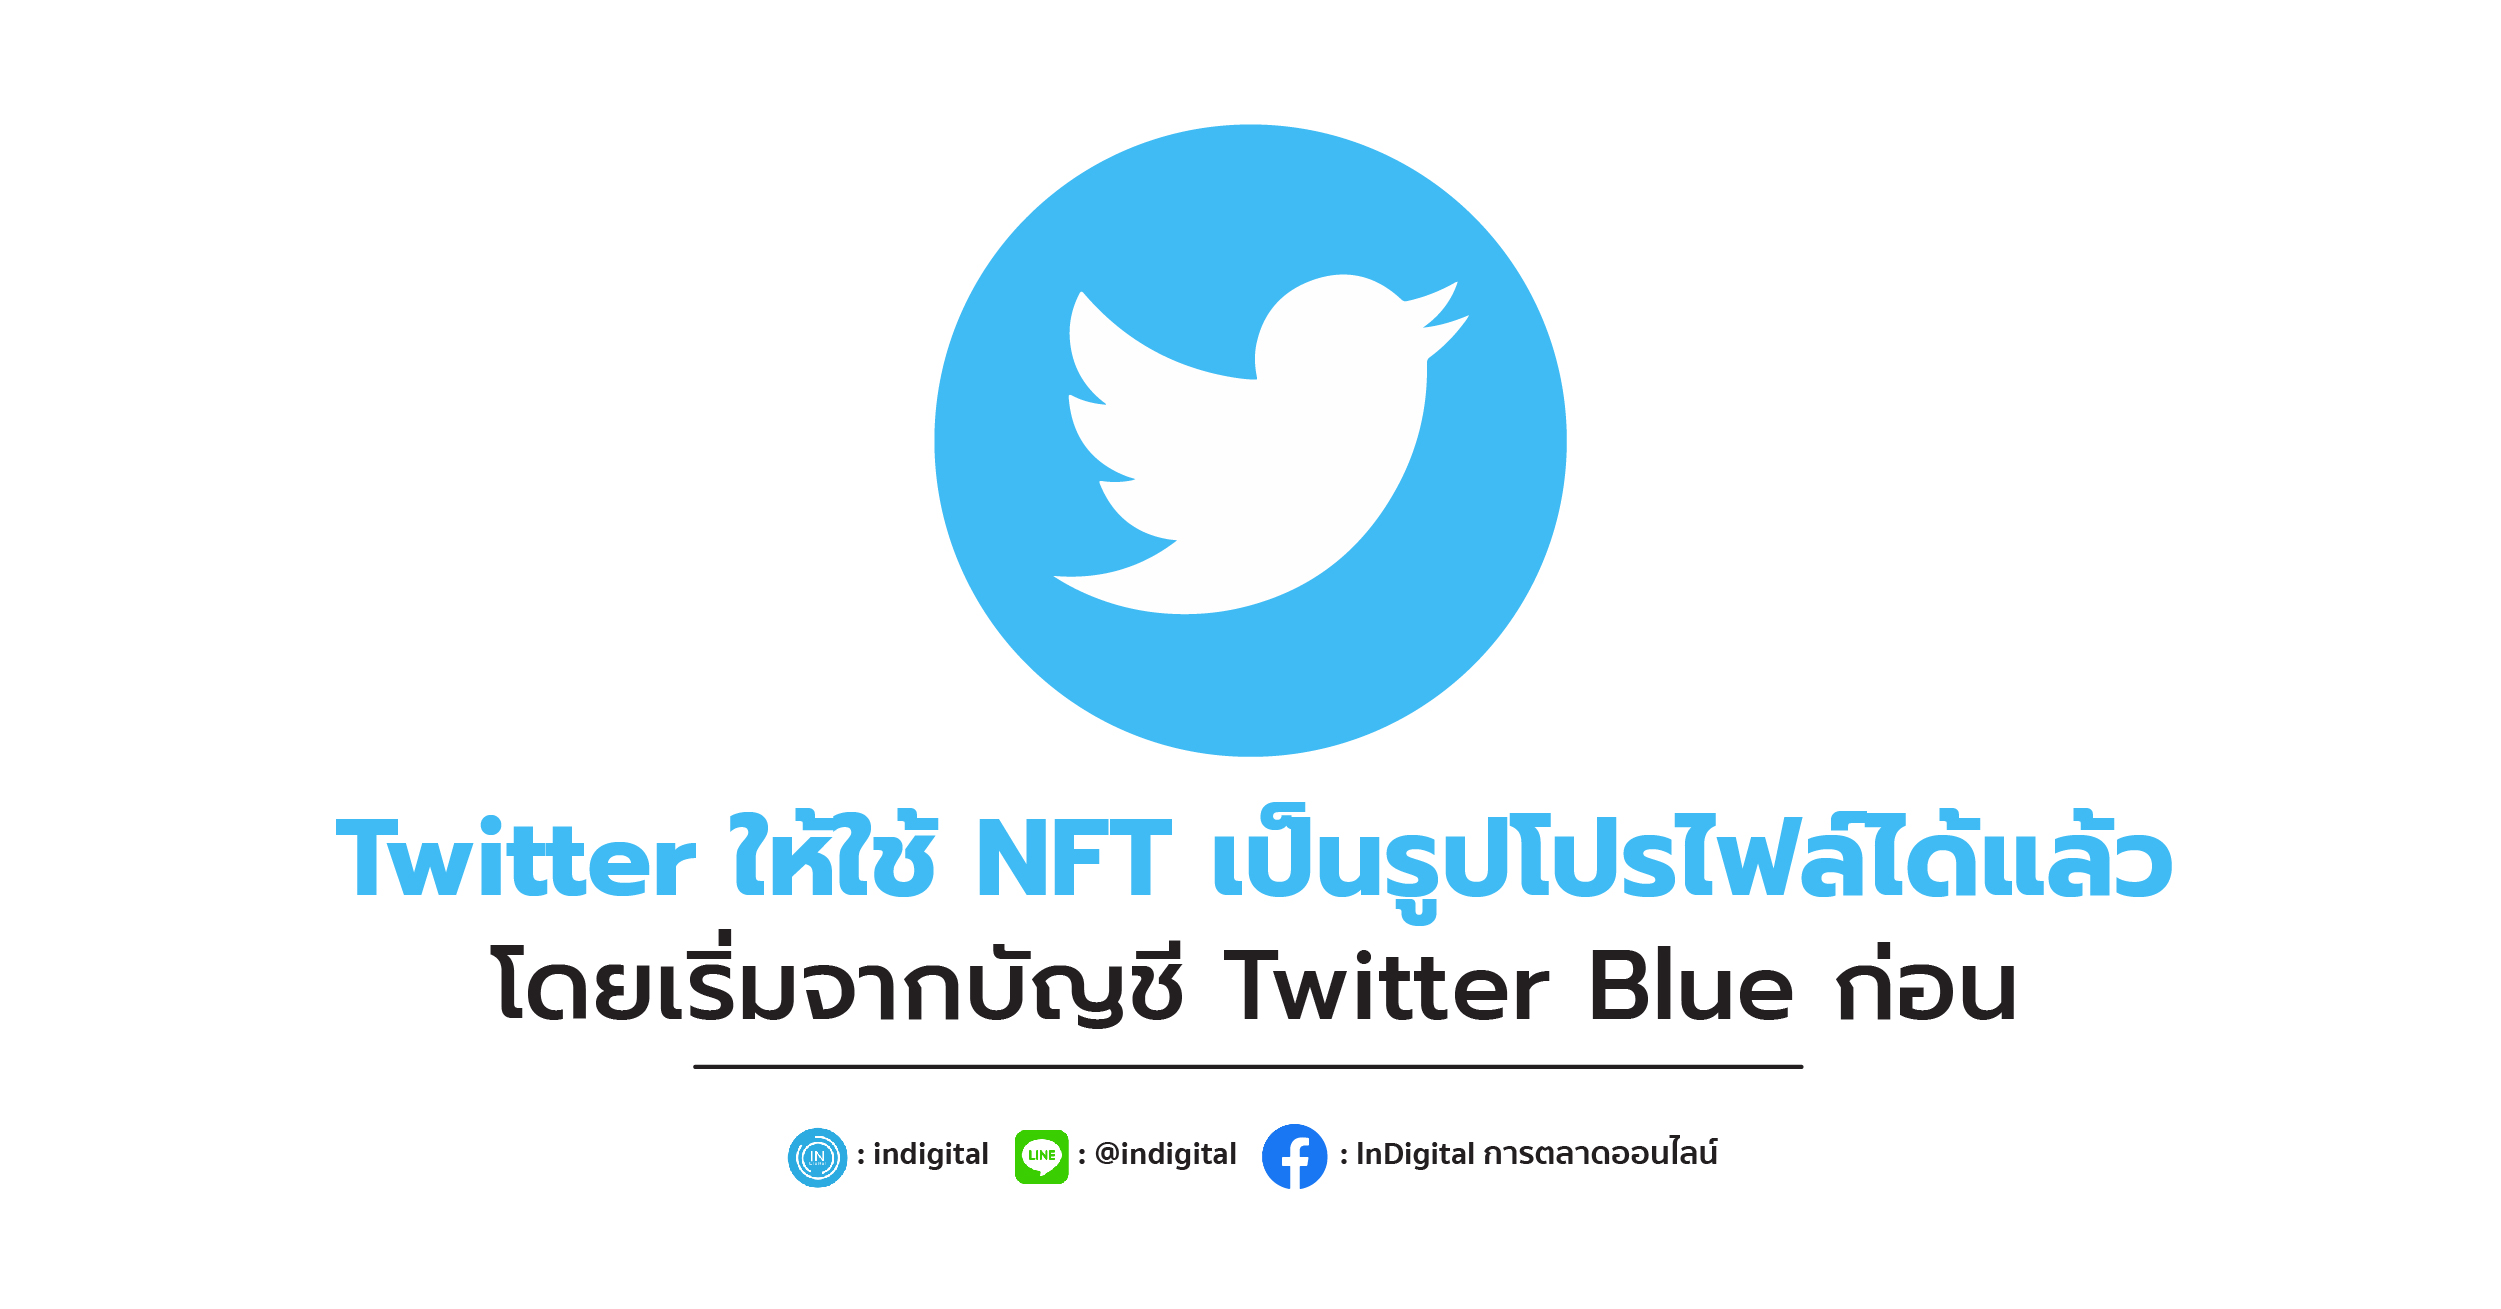 Twitter ให้ใช้ NFT เป็นรูปโปรไฟล์ได้แล้ว โดยเริ่มจากบัญชี Twitter Blue ก่อน